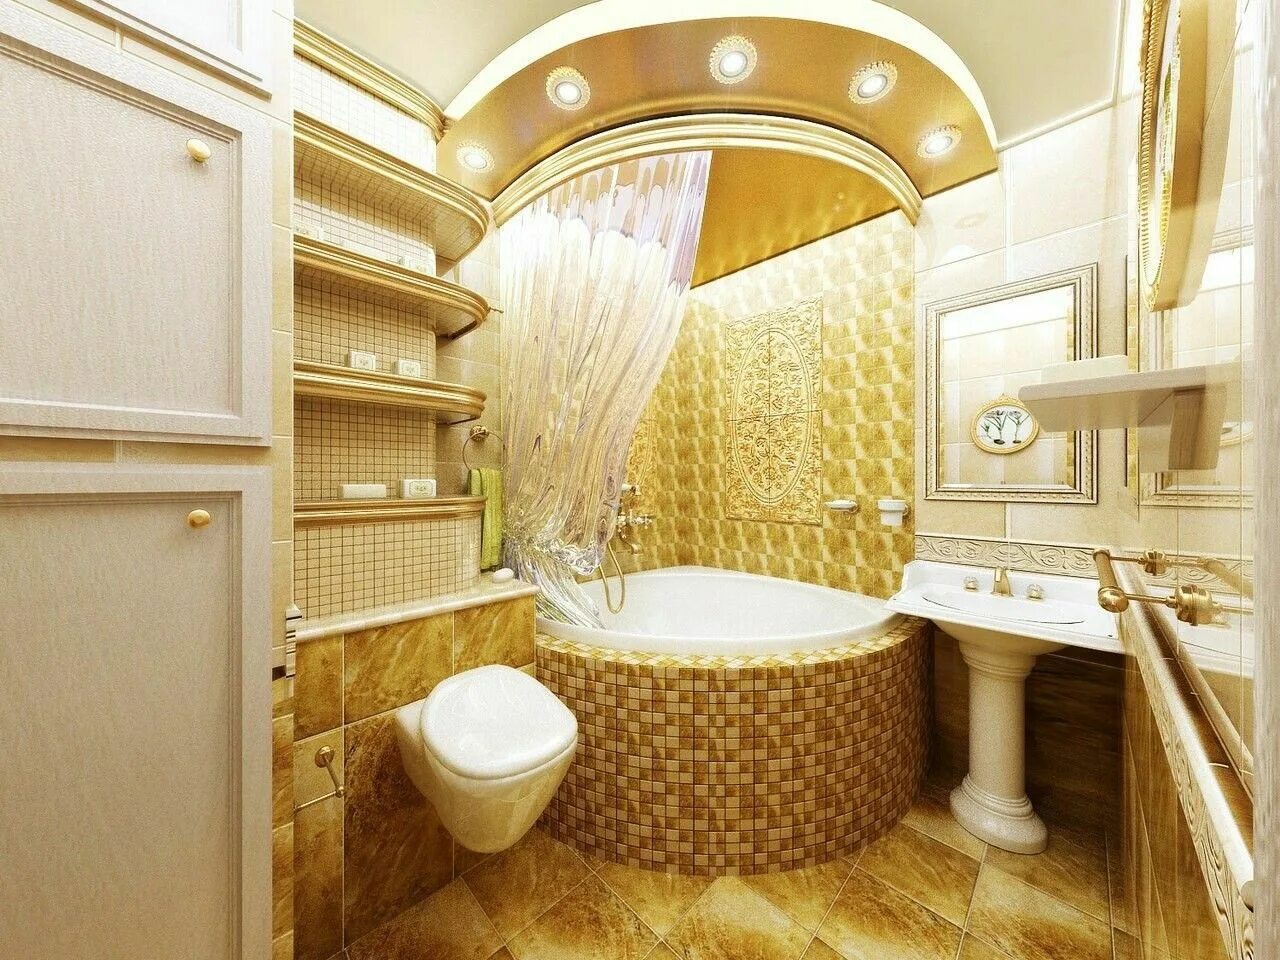 Ванная комната. Красивая ванная. Интерьер санузла. Дизайн ванной комнаты. Ванные комнаты магазин москва